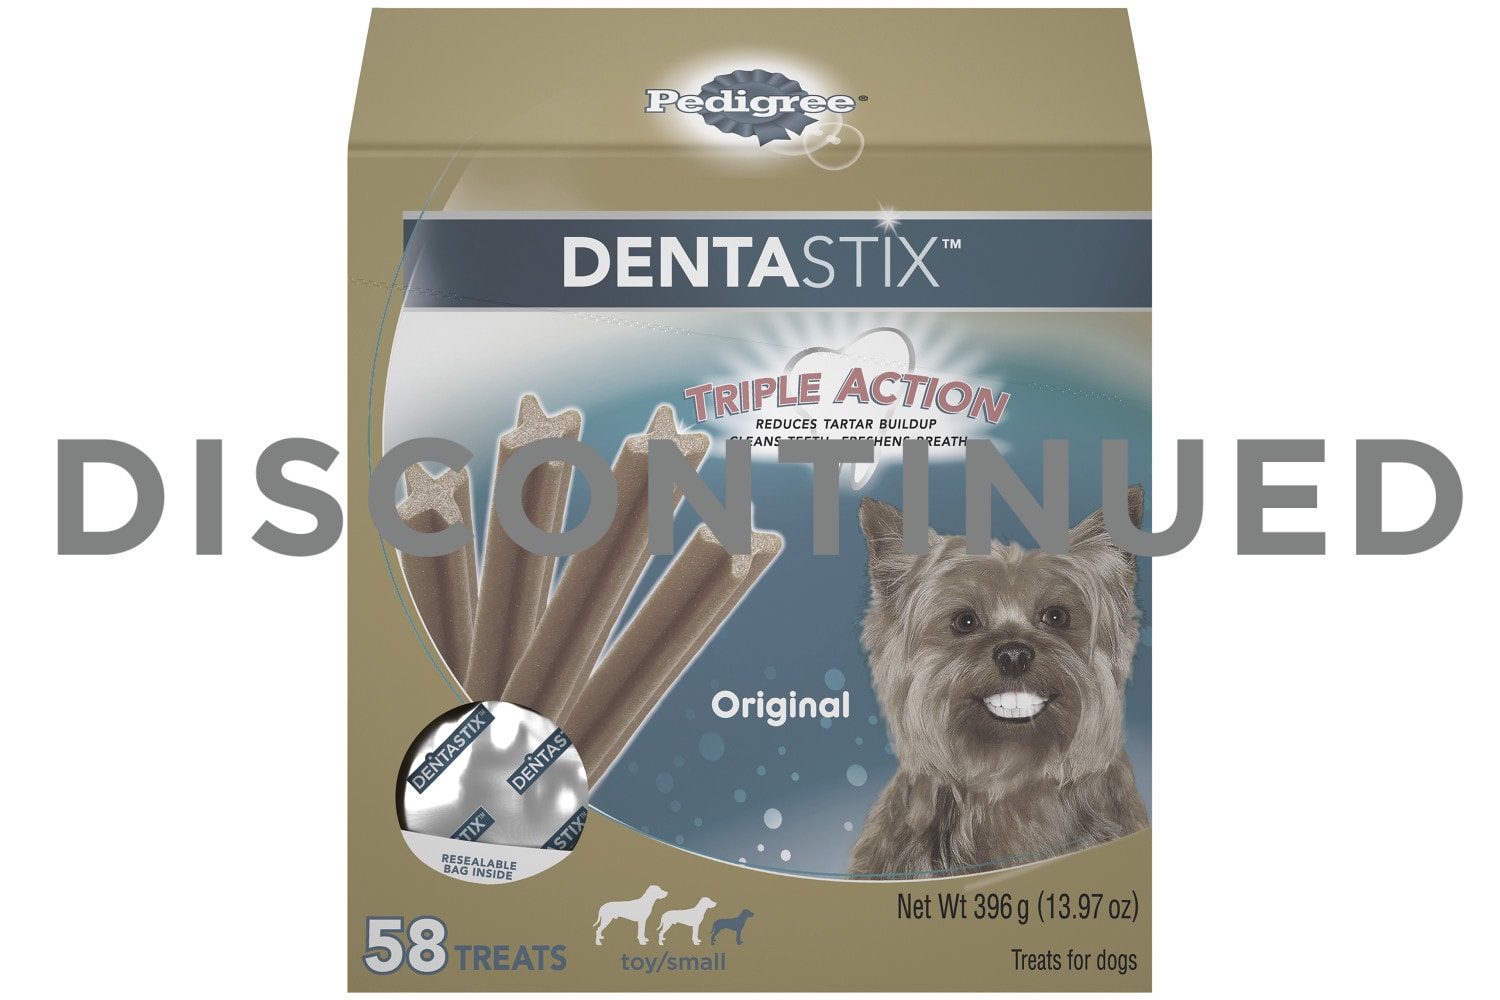 PEDIGREE DENTASTIX Toy/Small Dental Dog Treats Original, 13.97 oz. (58 Treats) - image 1 of 10